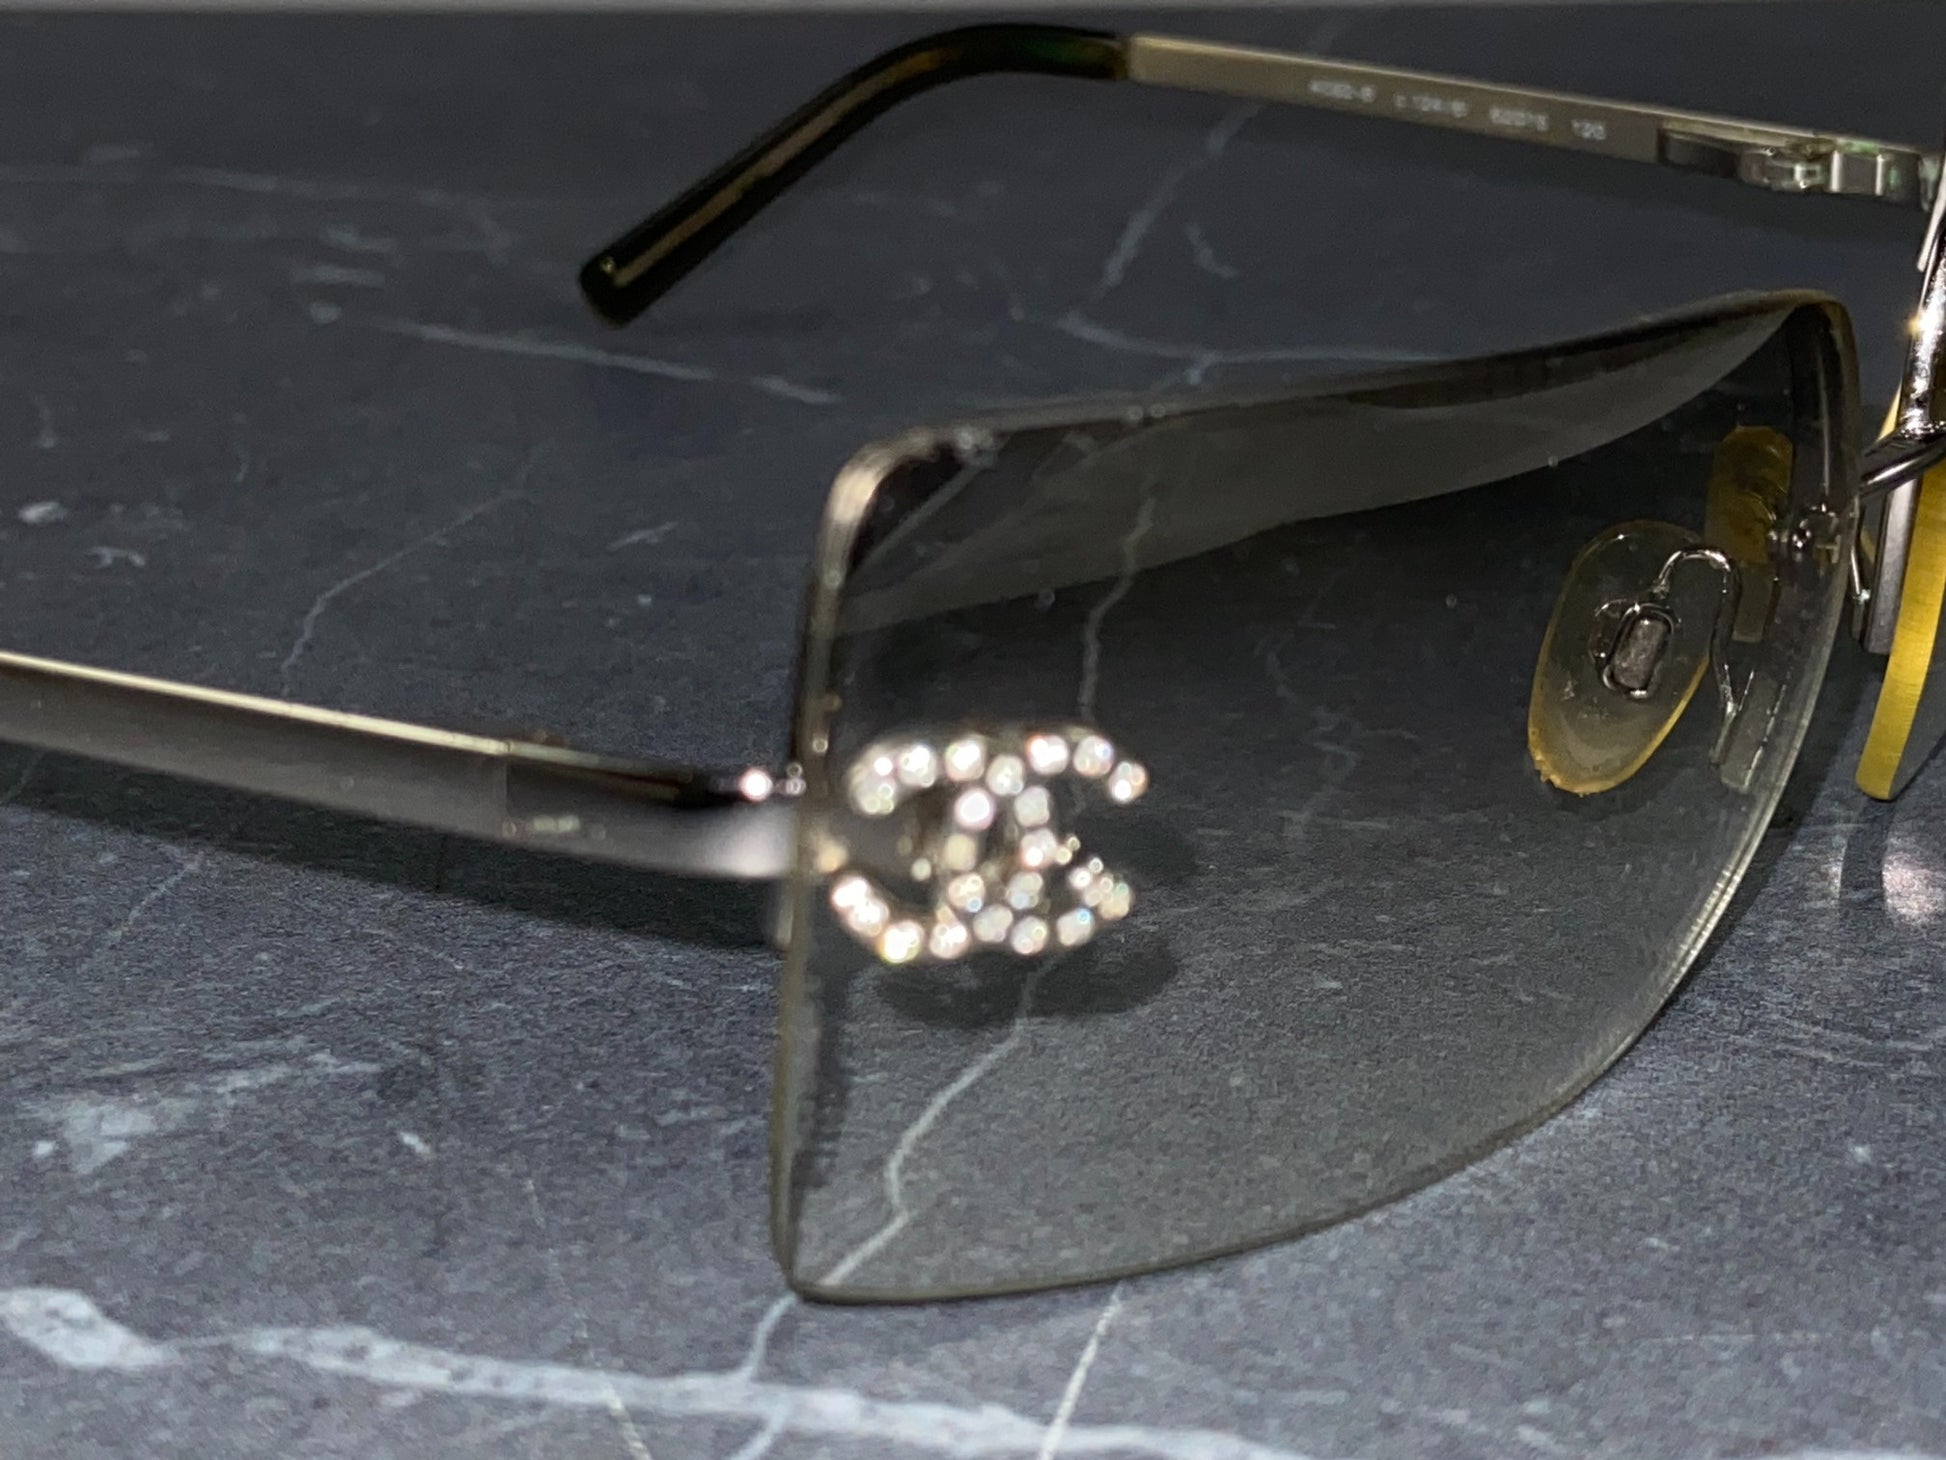 Sunglasses Chanel Black in Metal - 34878797